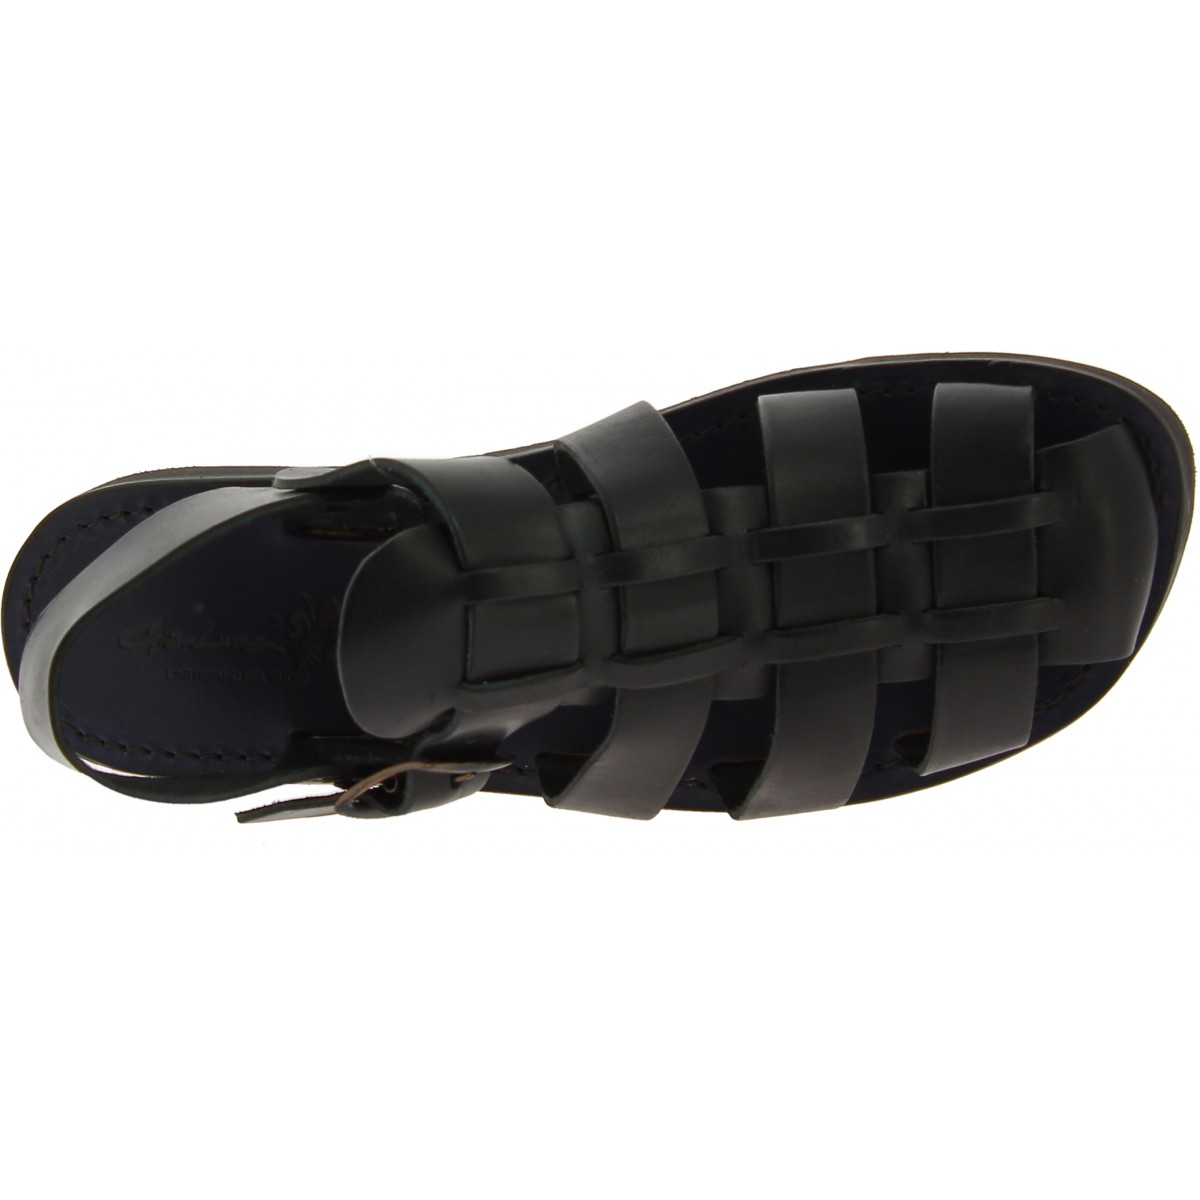 Gianluca Sandalias frailes para hombre en cuero negro hechas a mano L'artigiano del cuoio Zapatos Zapatos para hombre Sandalias Cangrejeras 